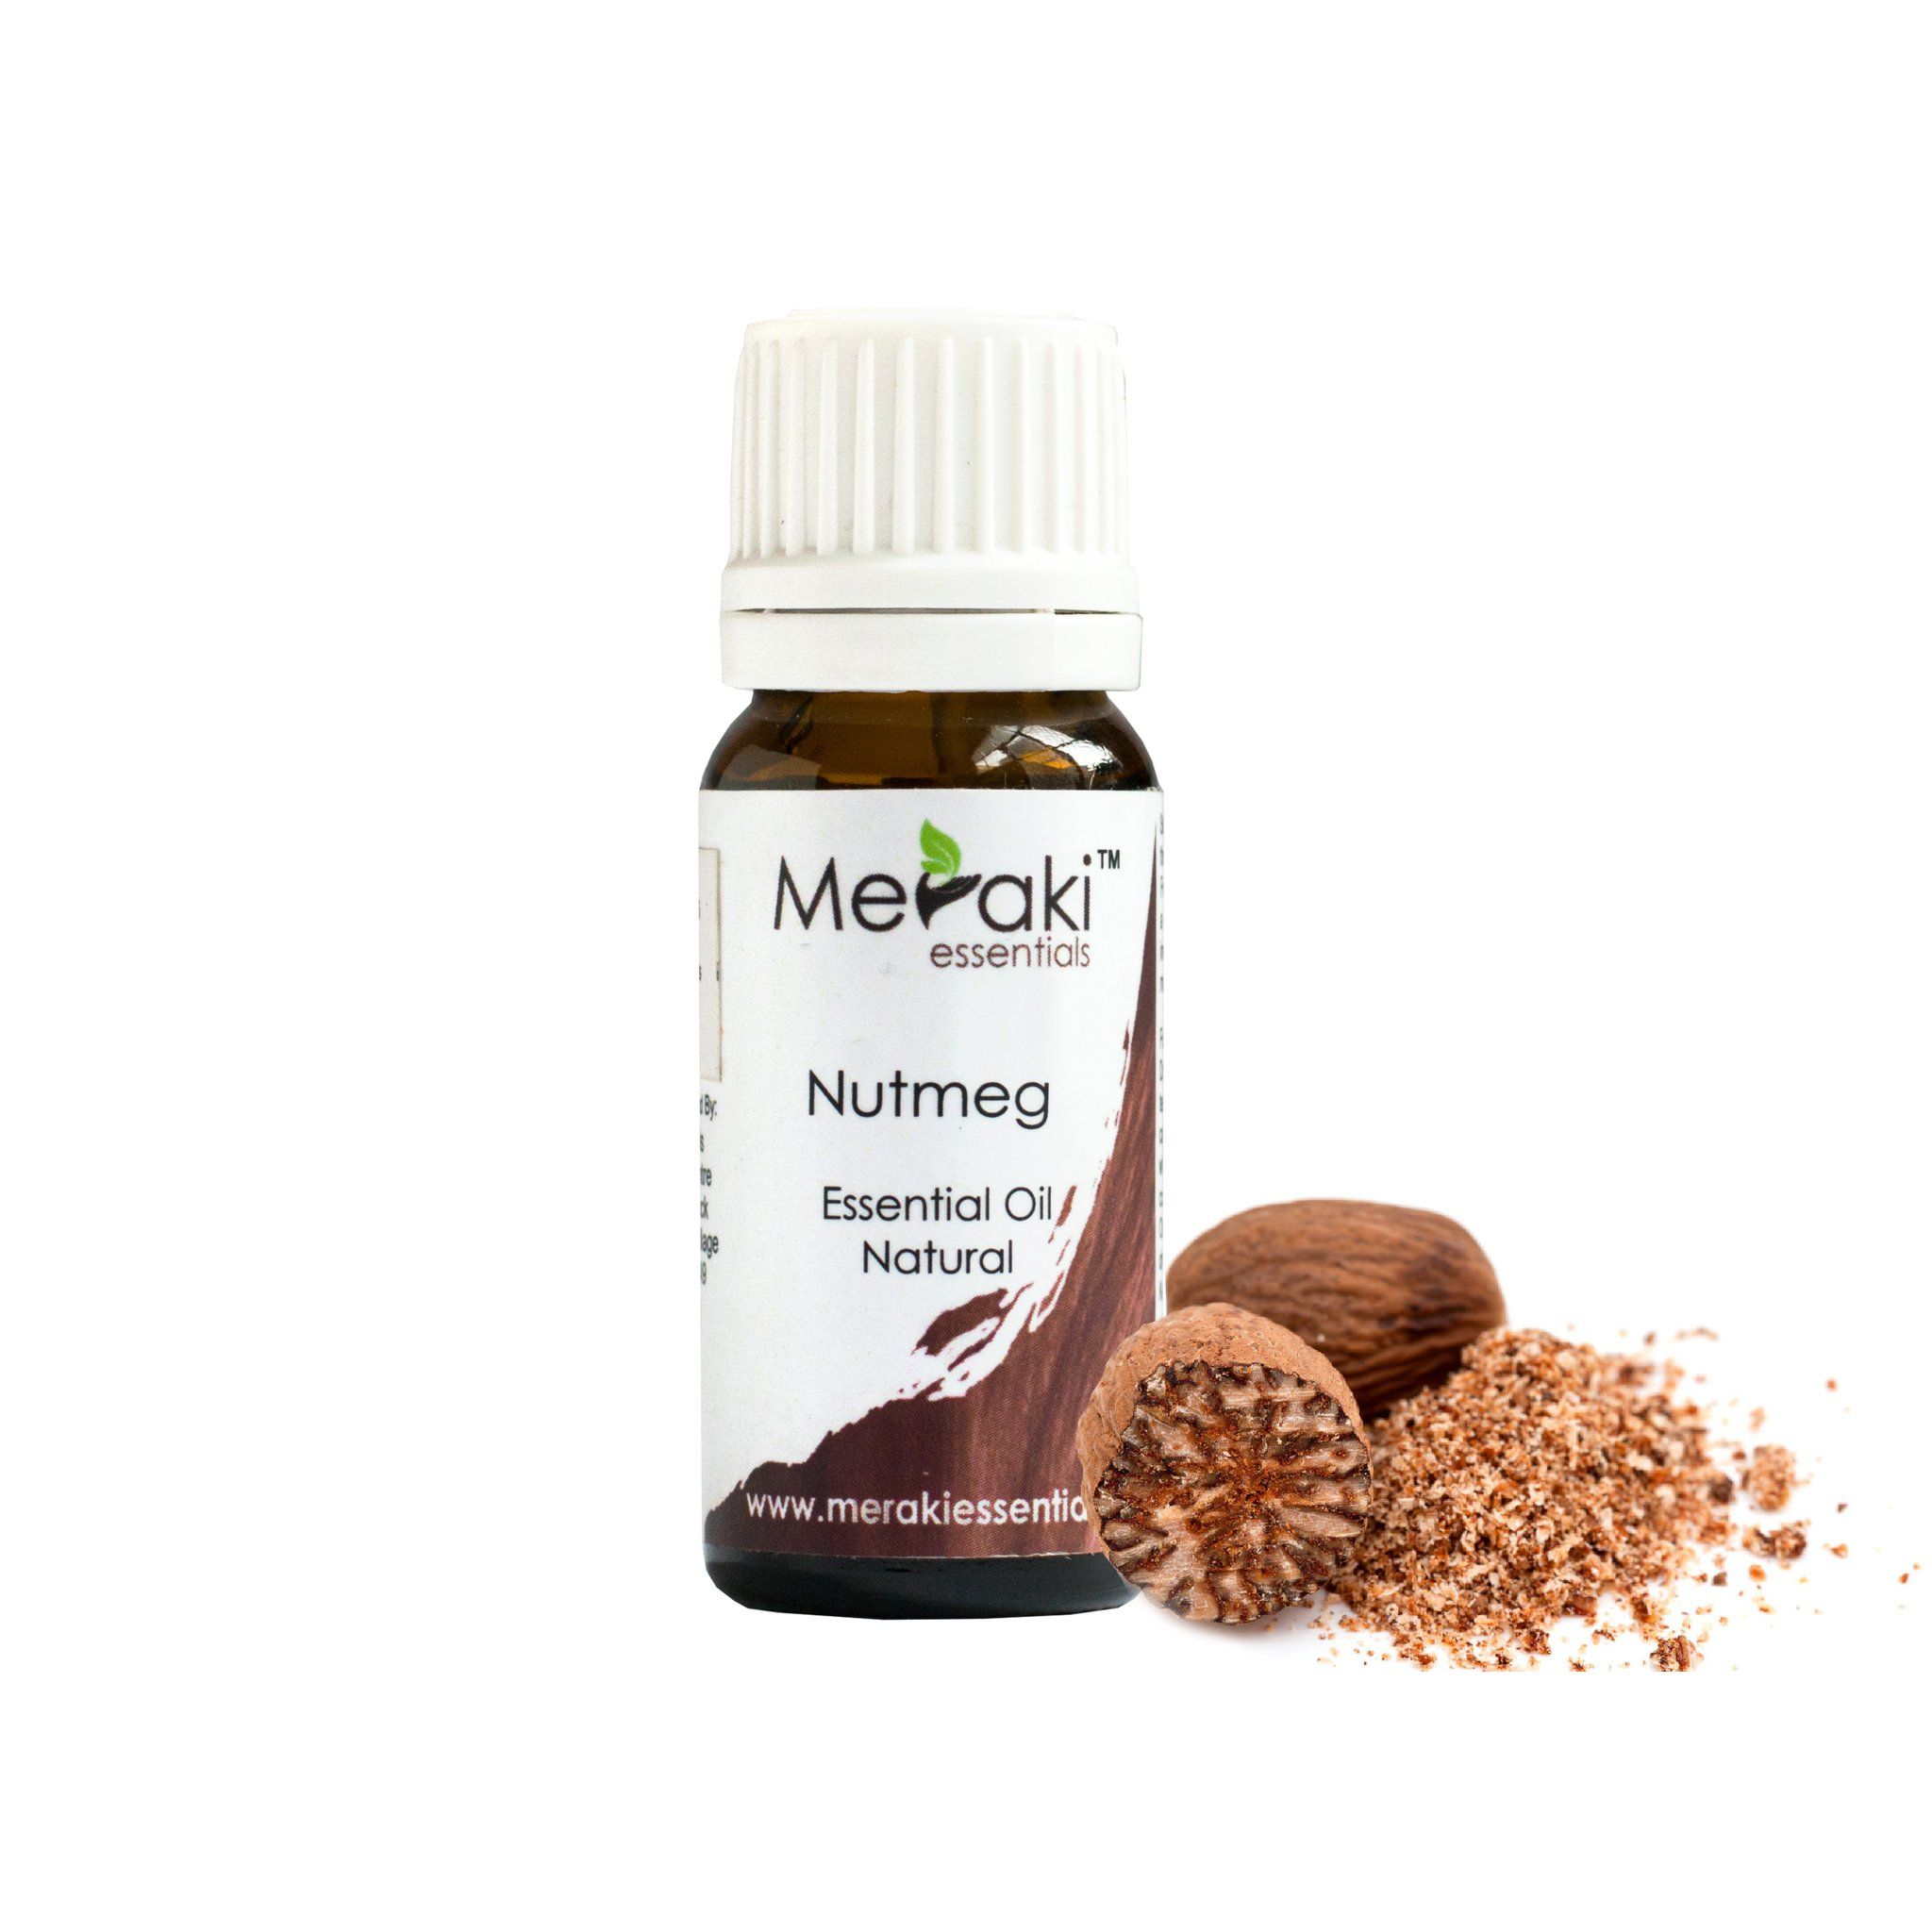 Meraki Nutmeg Essential Oil - Meraki Essentials